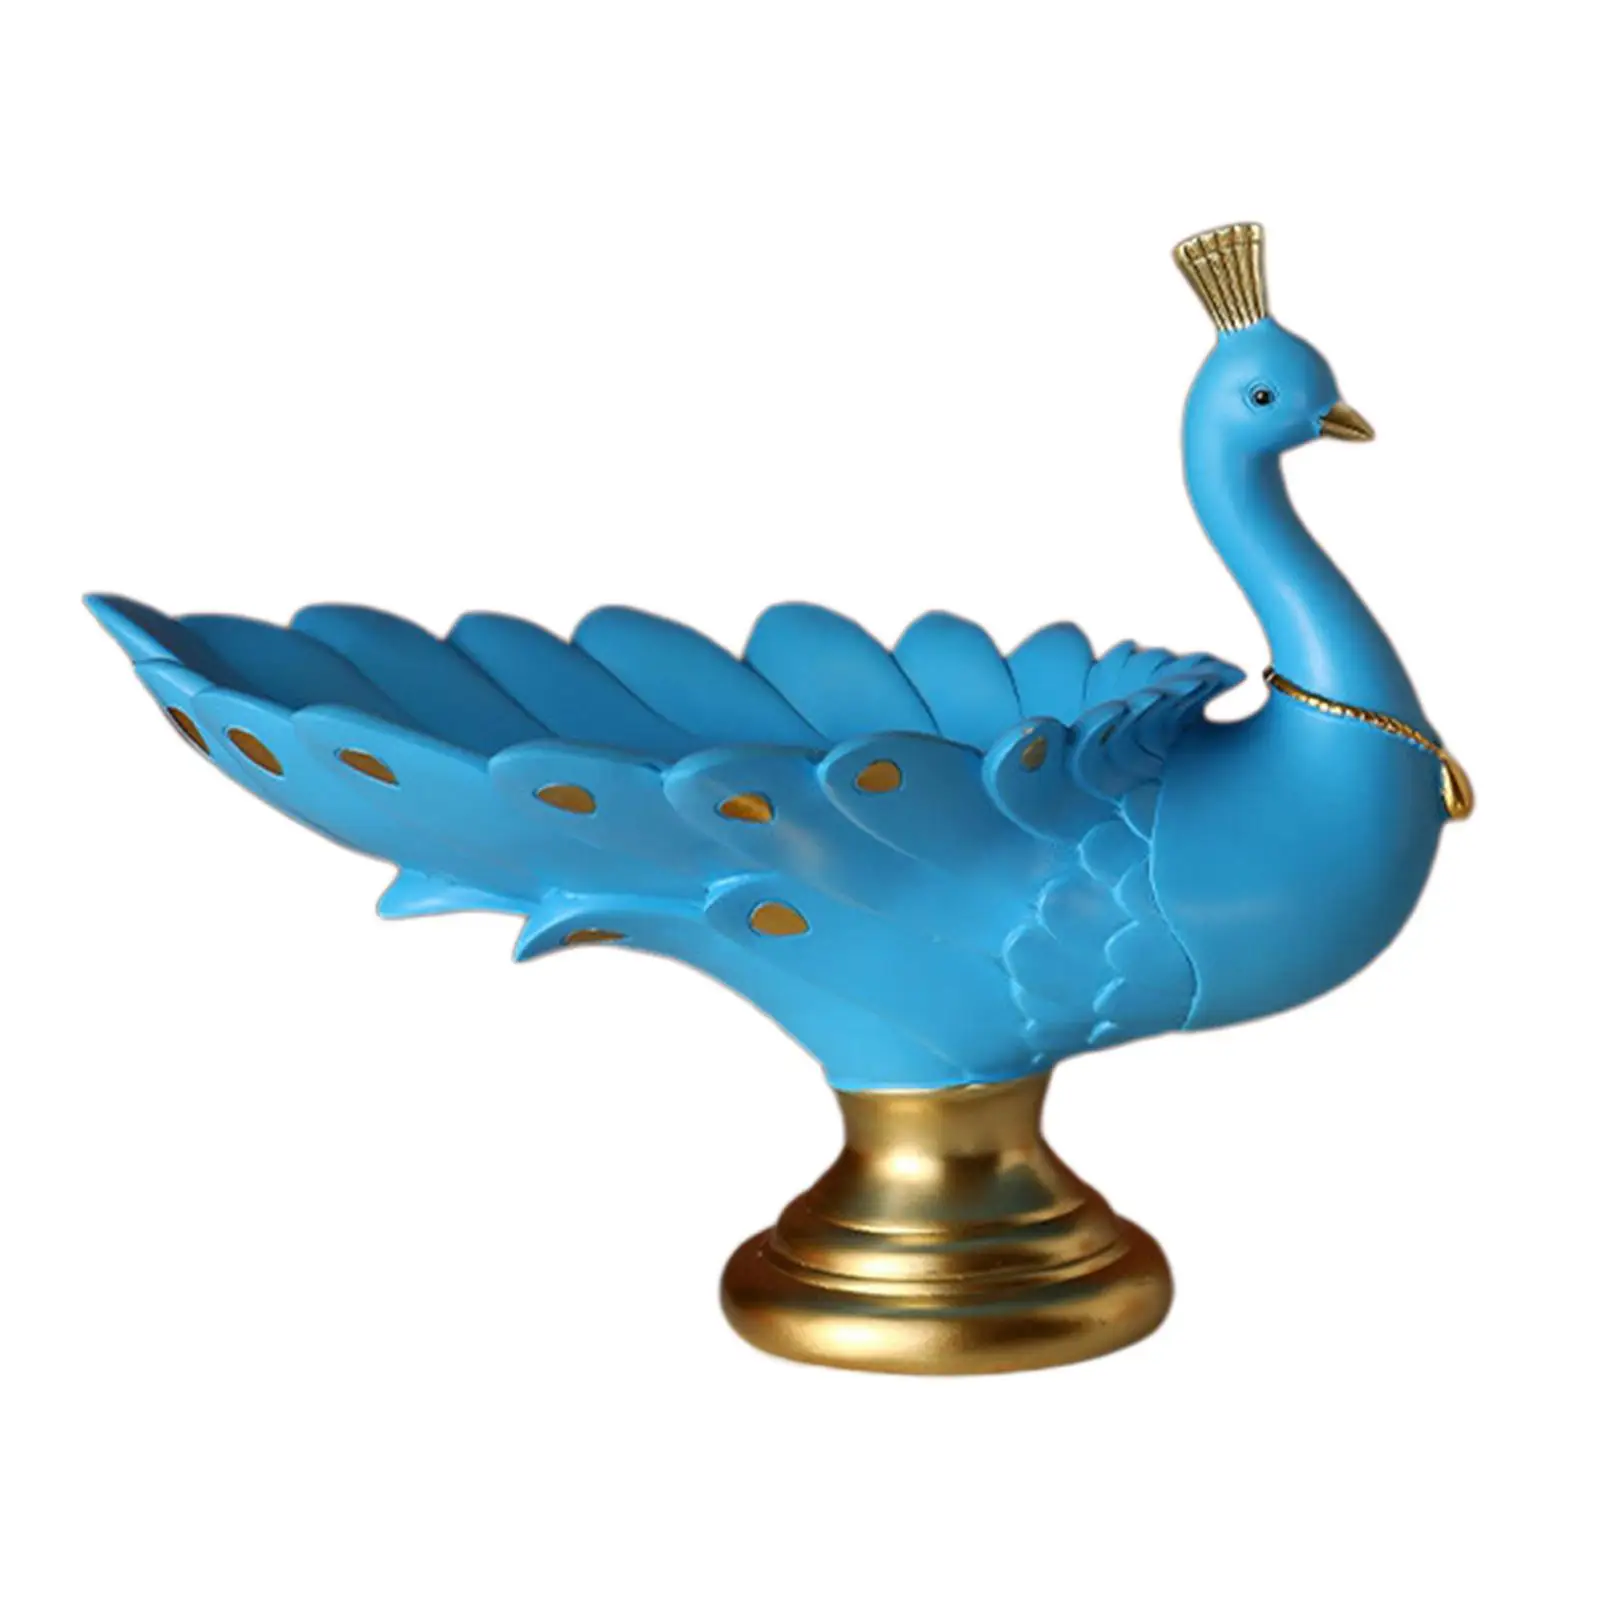 Blue Bird Sculpture, Organizer, Toy, Resin Figurine Crafts Statue for Tabletop Hallway Kids Home